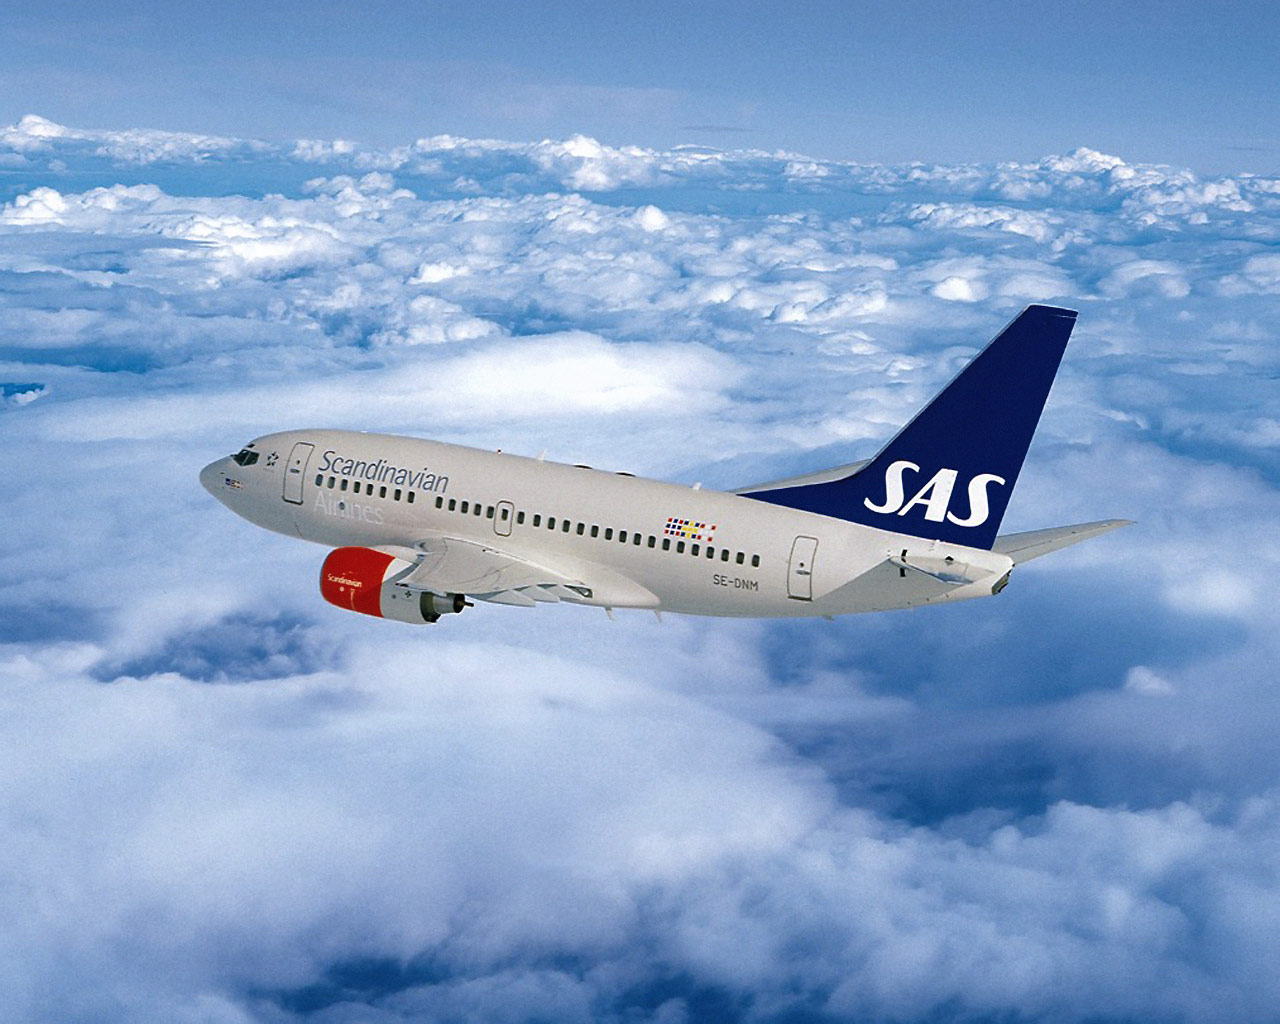 ... 737 Scandinavian Airlines SAS Plane Wallpapers | Plane Wallpapers